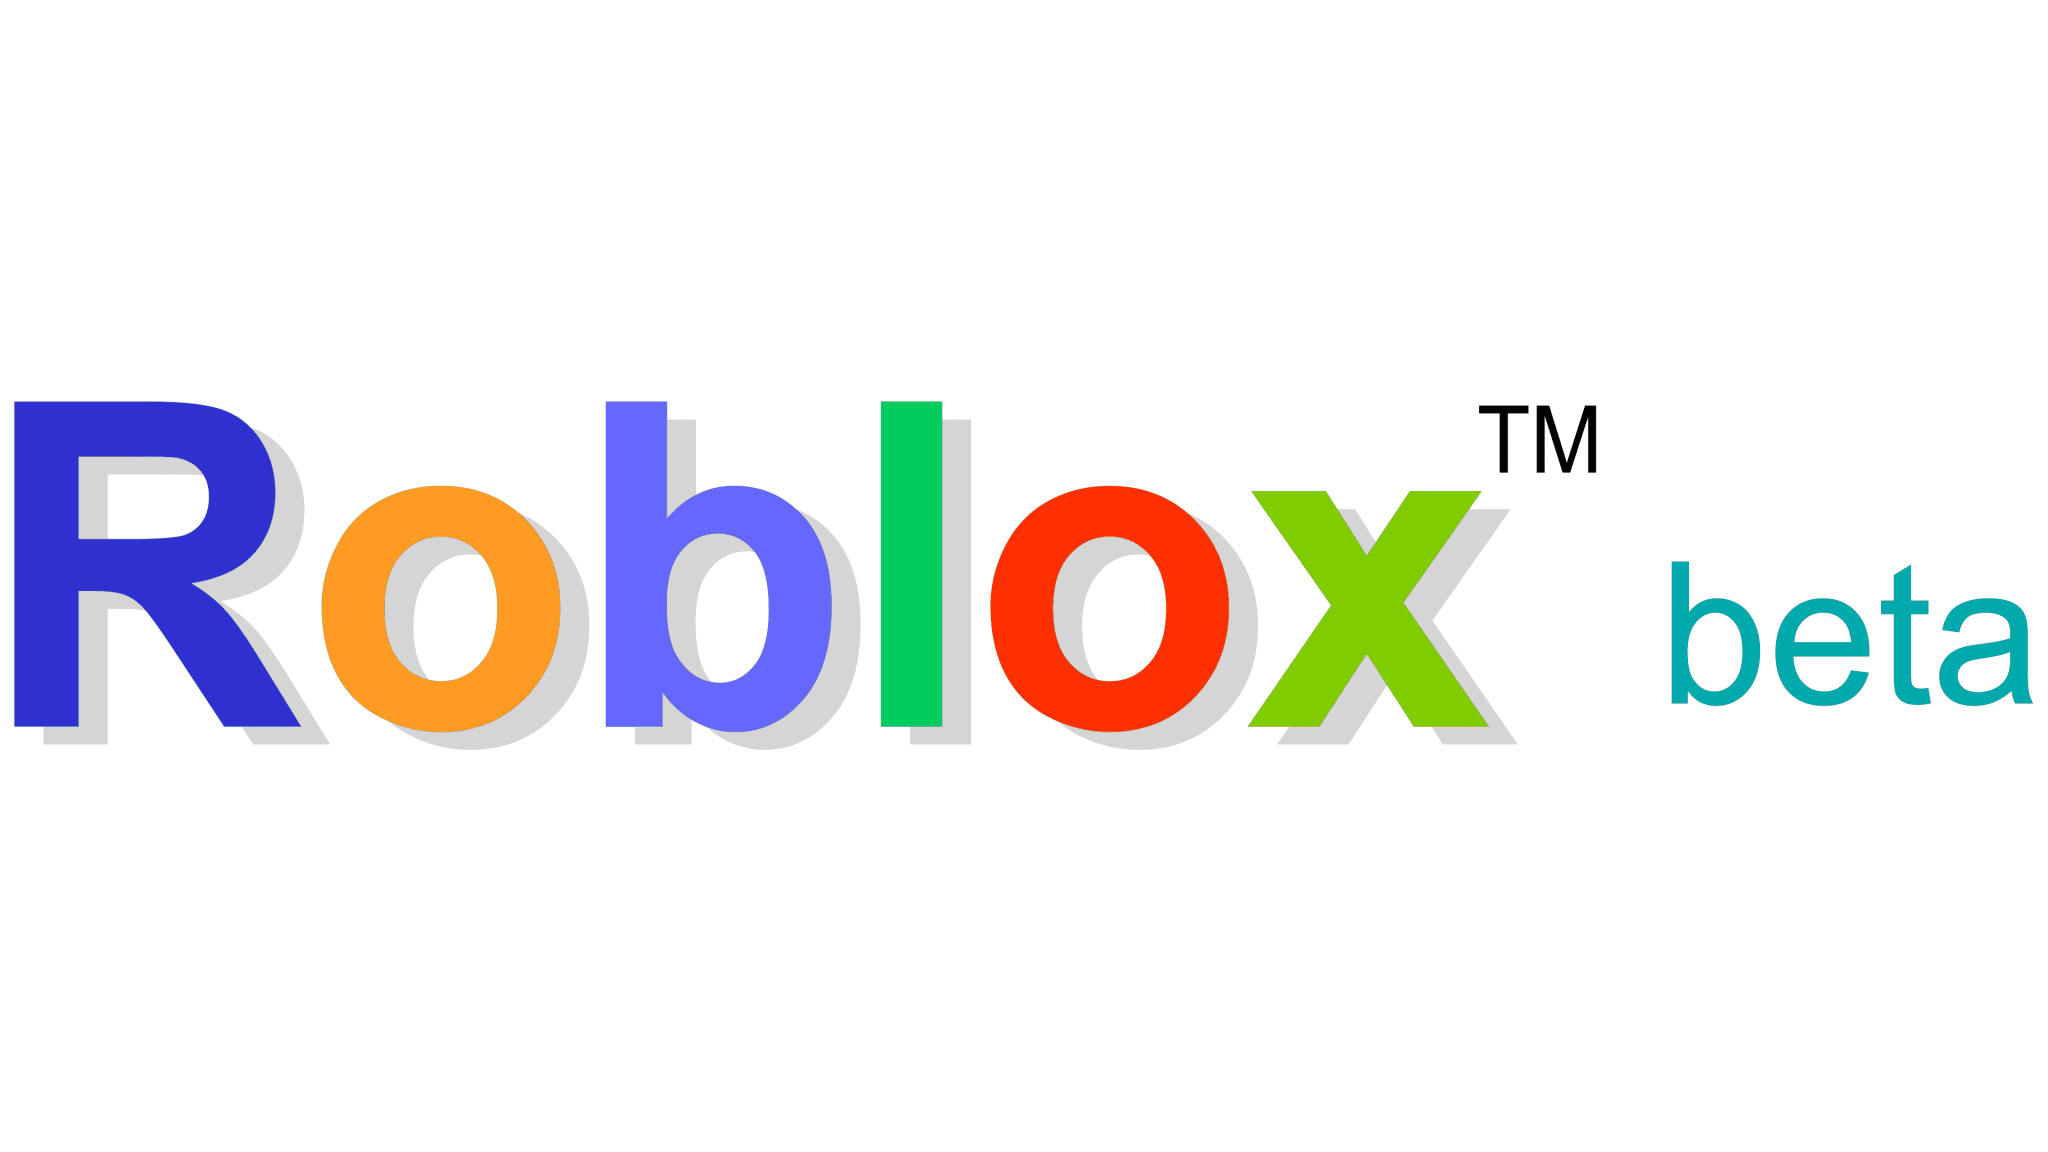 old roblox logo, roblox logo history, roblox logo evolution, history of roblox, typography logo